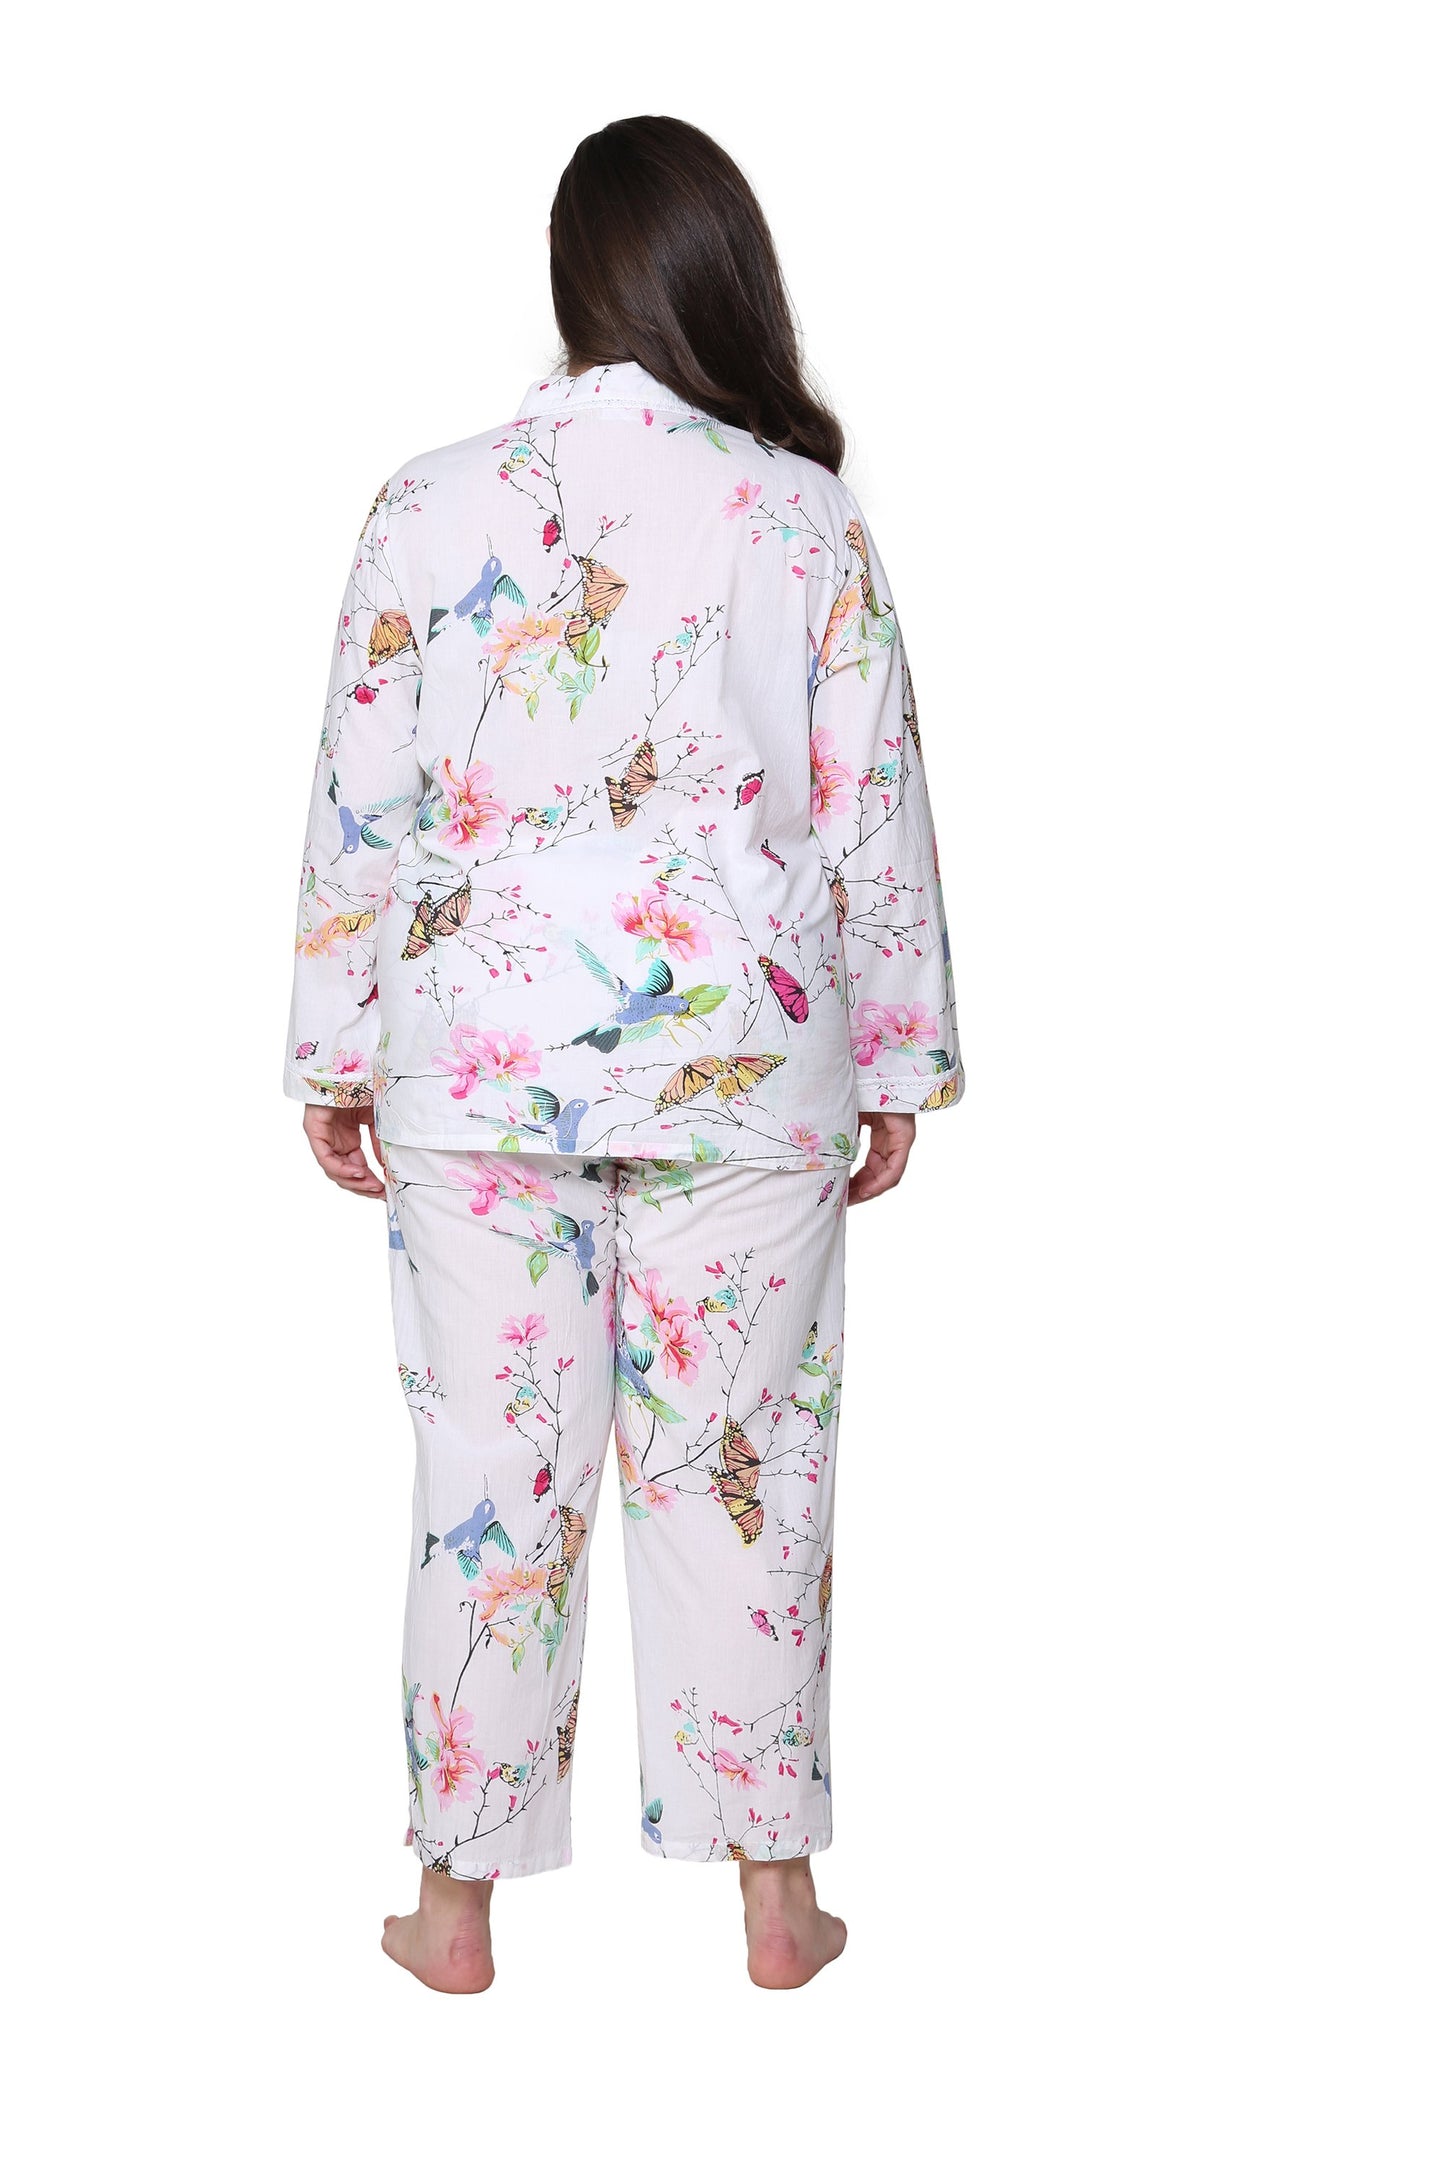 100% Cotton Long Sleeve Pyjamas 1411 - Hummingbird Island